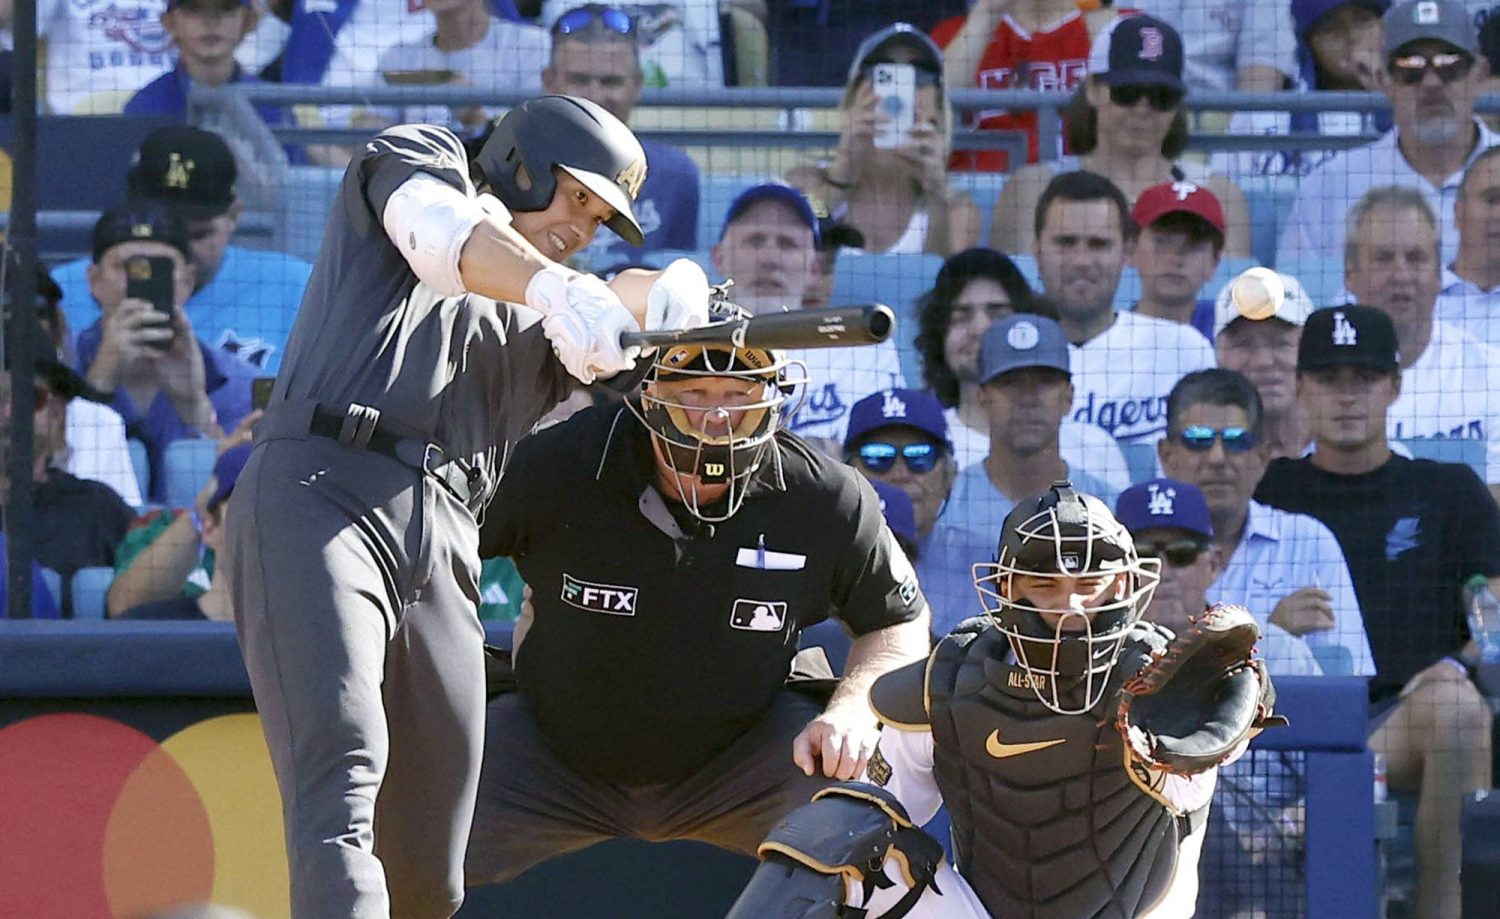 LA Native Giancarlo Stanton Shines in MLB All-Star Game at Dodger Stadium